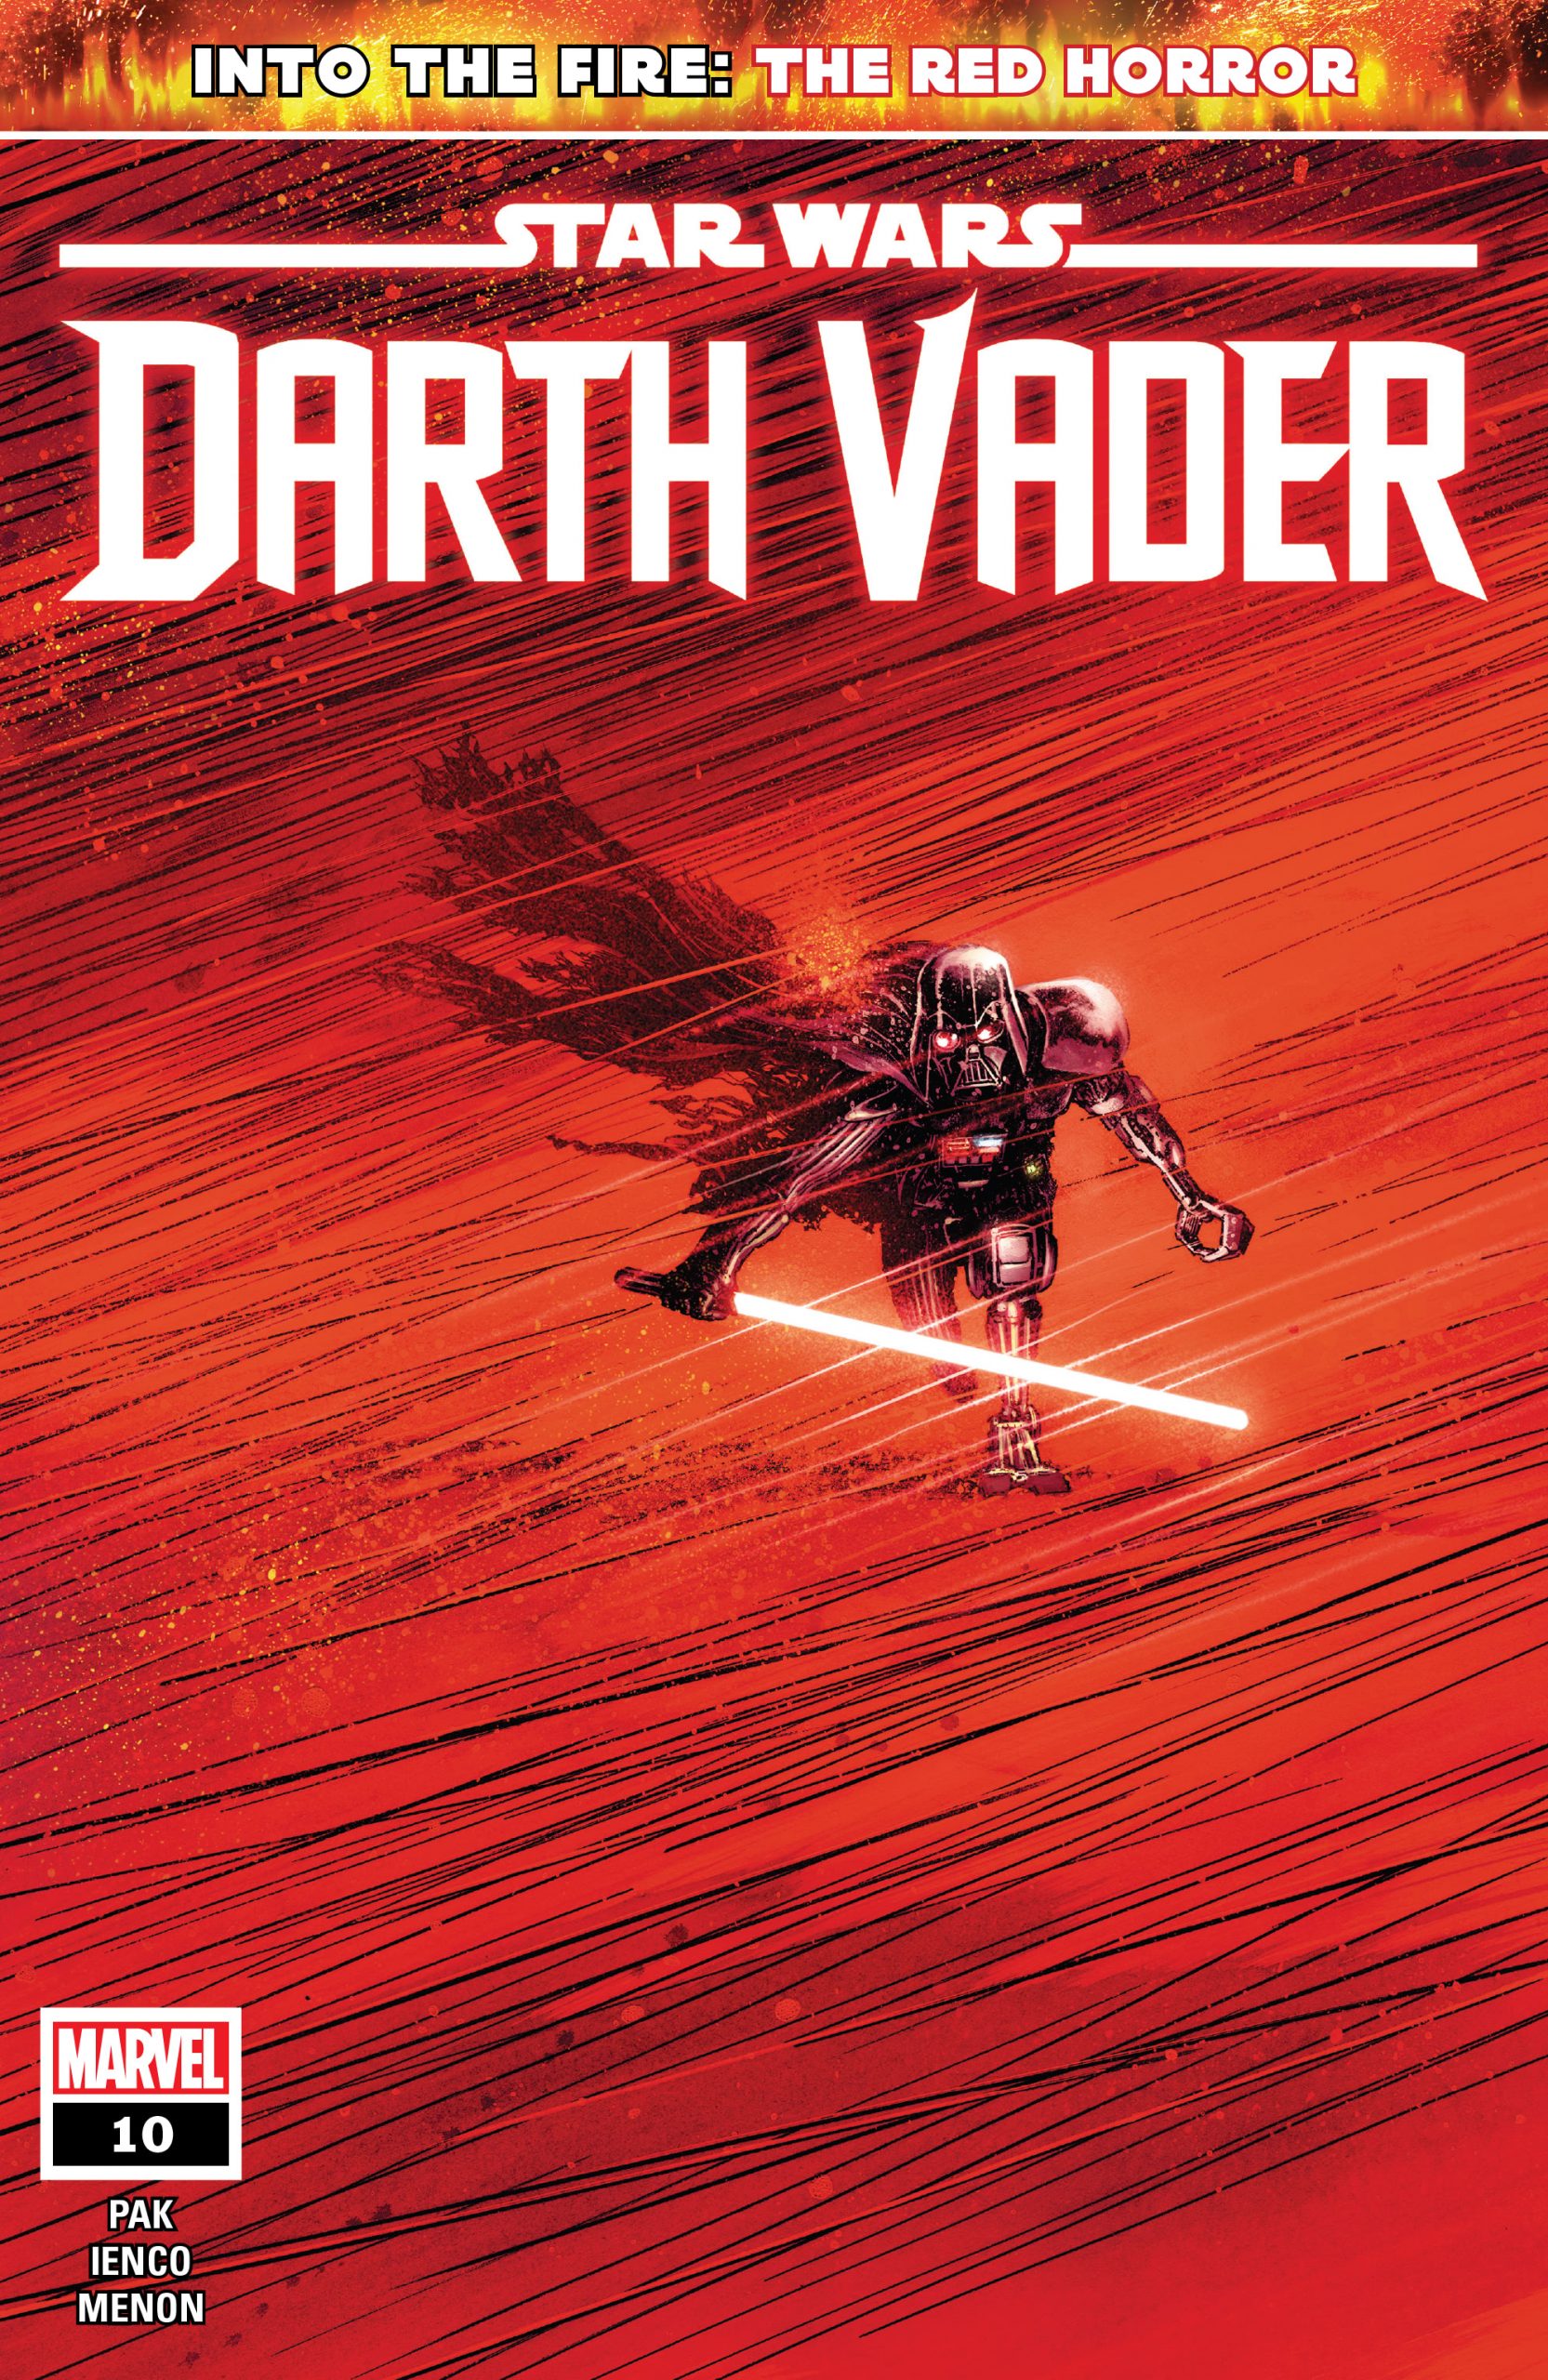 Darth Vader 2017 Comic Book Poster Wallpapers